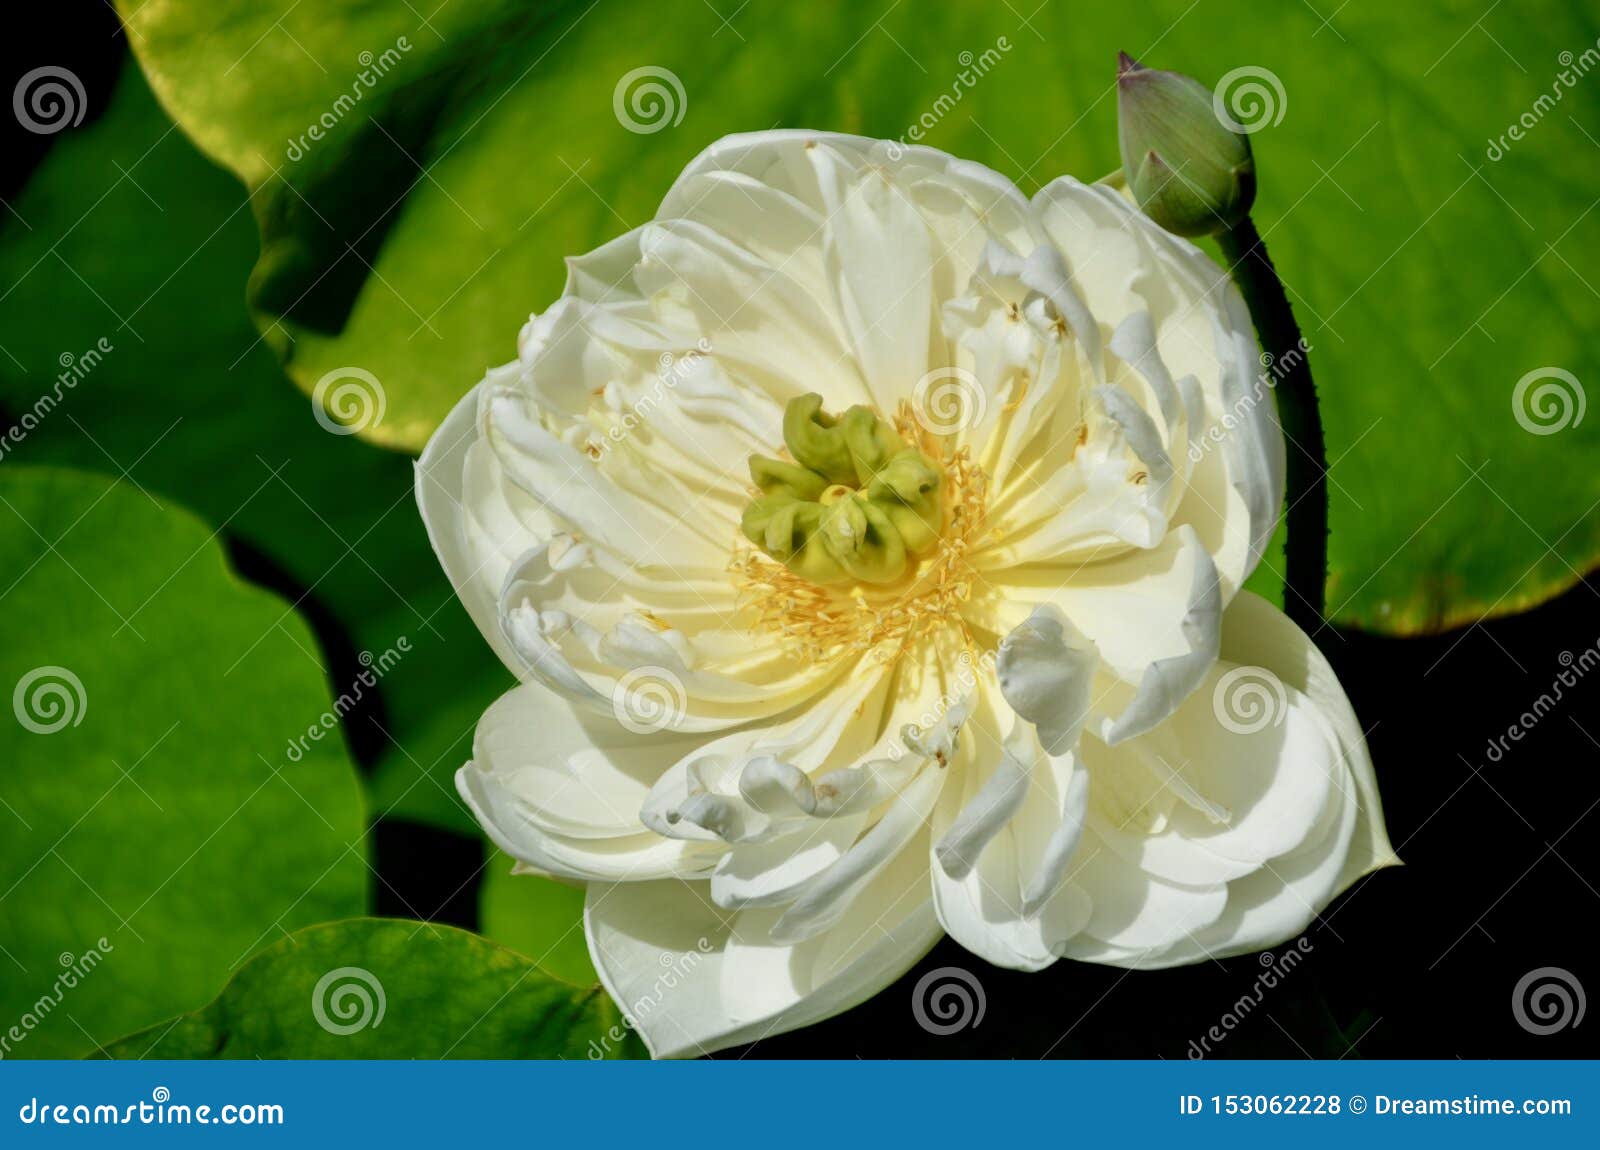 nice natural white flower